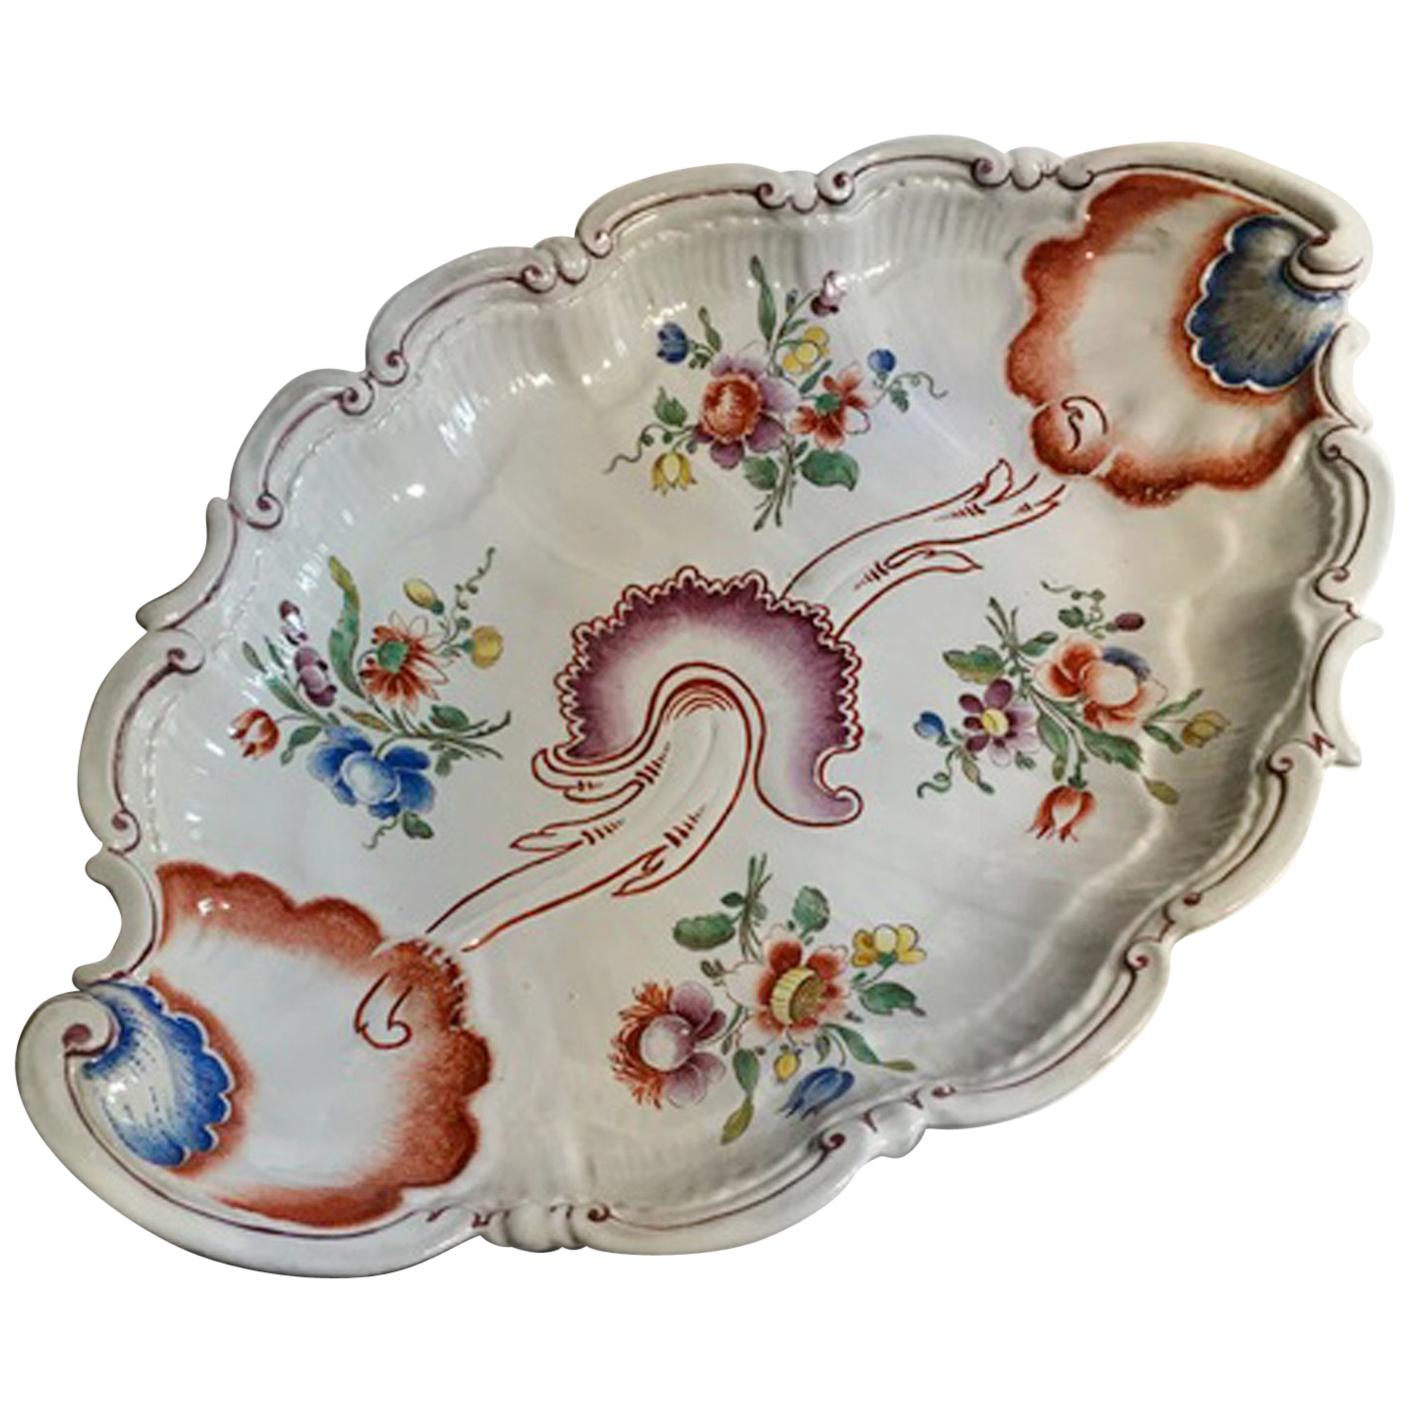 Italy Richard Ginori 1750 Porcelain Bowl